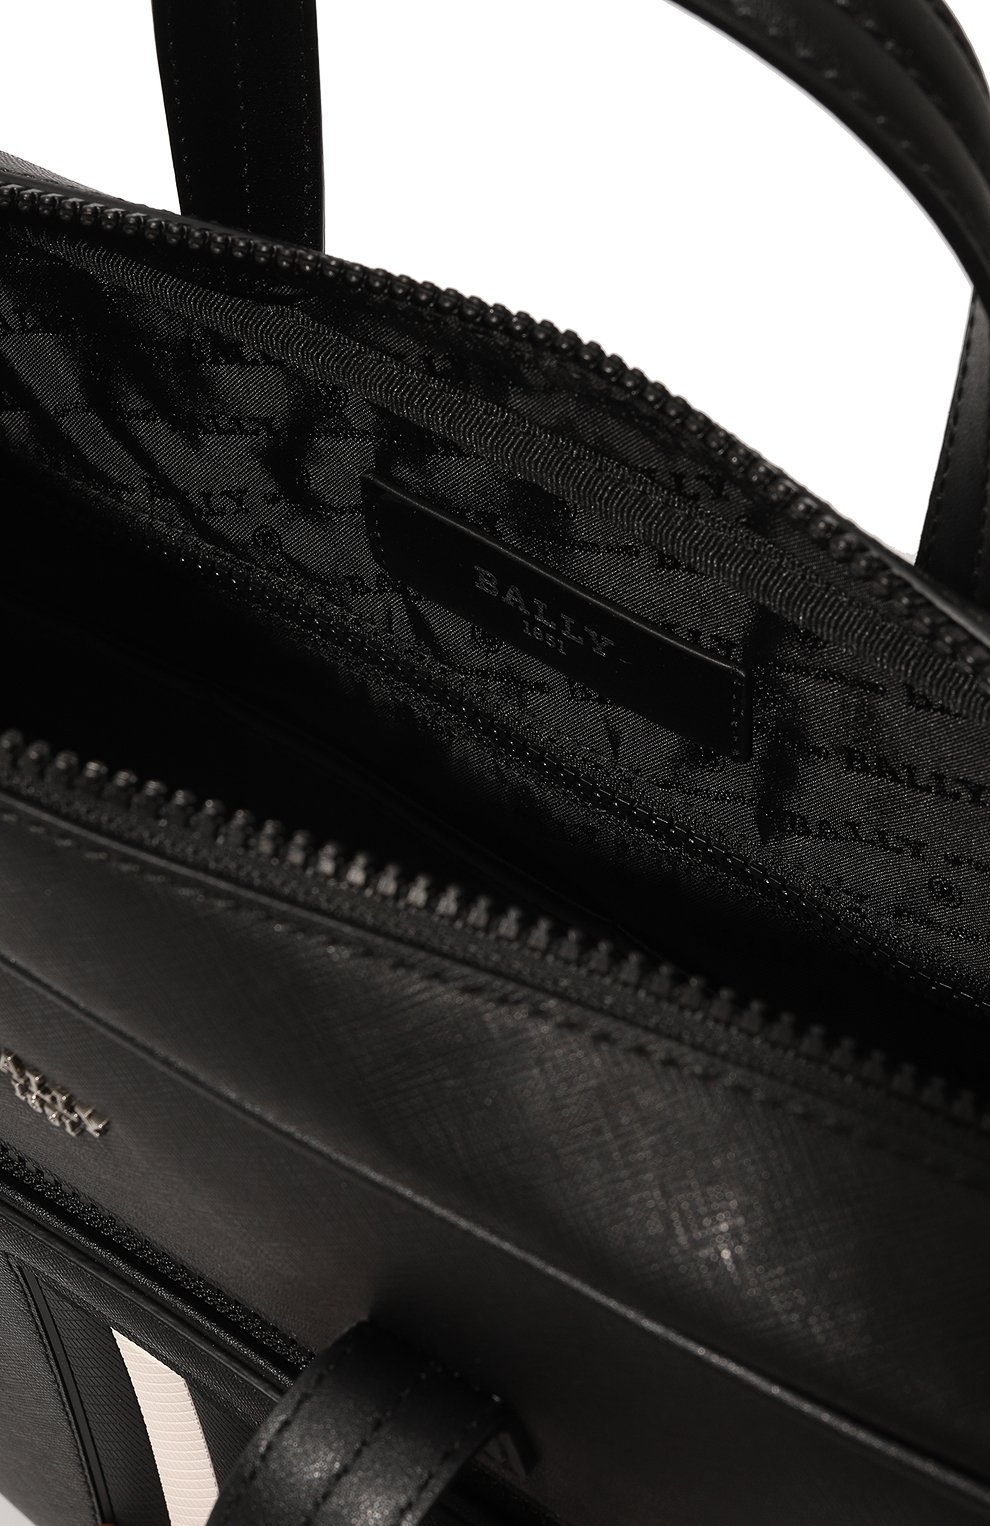 Мужская кожаная сумка для ноутбука BALLY черного цвета, арт. MAB00D/VT116 | Фото 5 (Материал: Натуральная кожа; Ремень/цепочка: На ремешке; Размер: large)